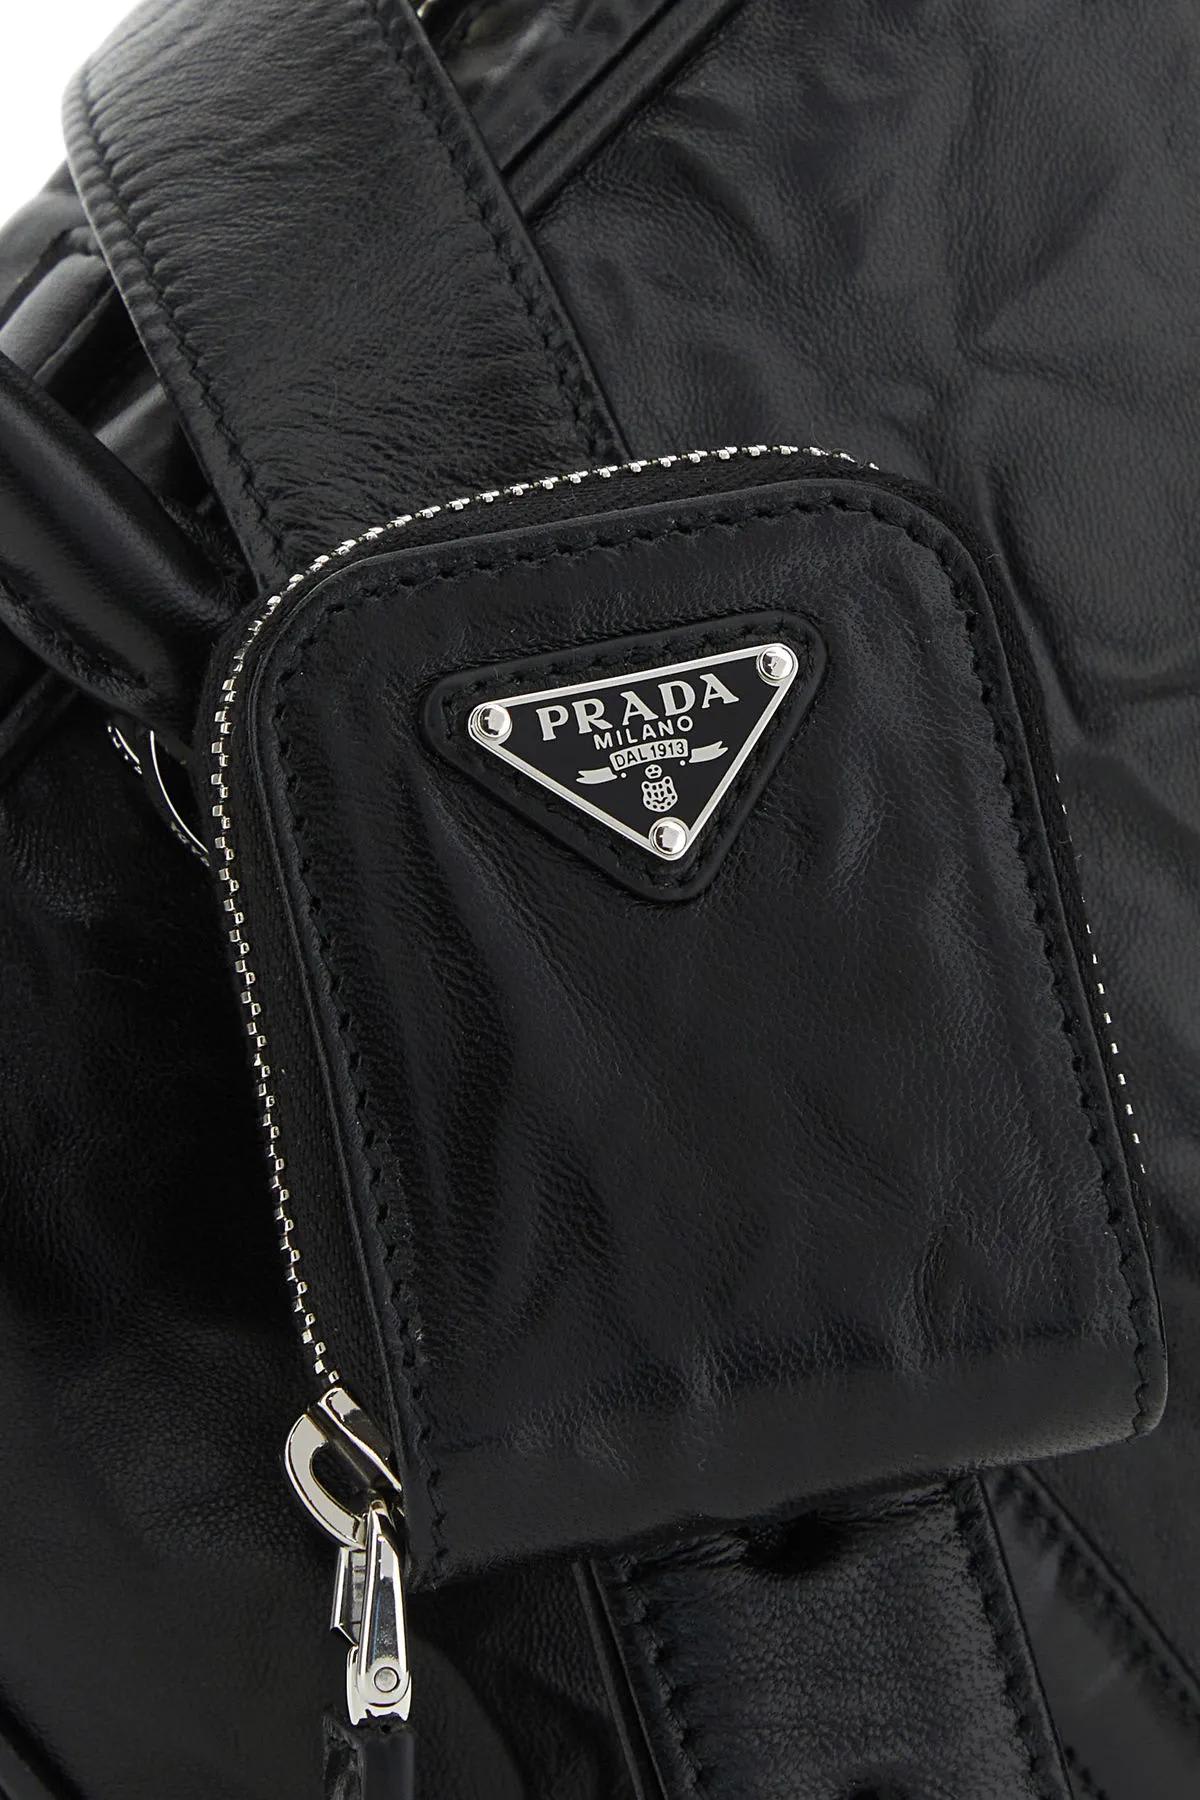 Shop Prada Black Nappa Leather Handbag